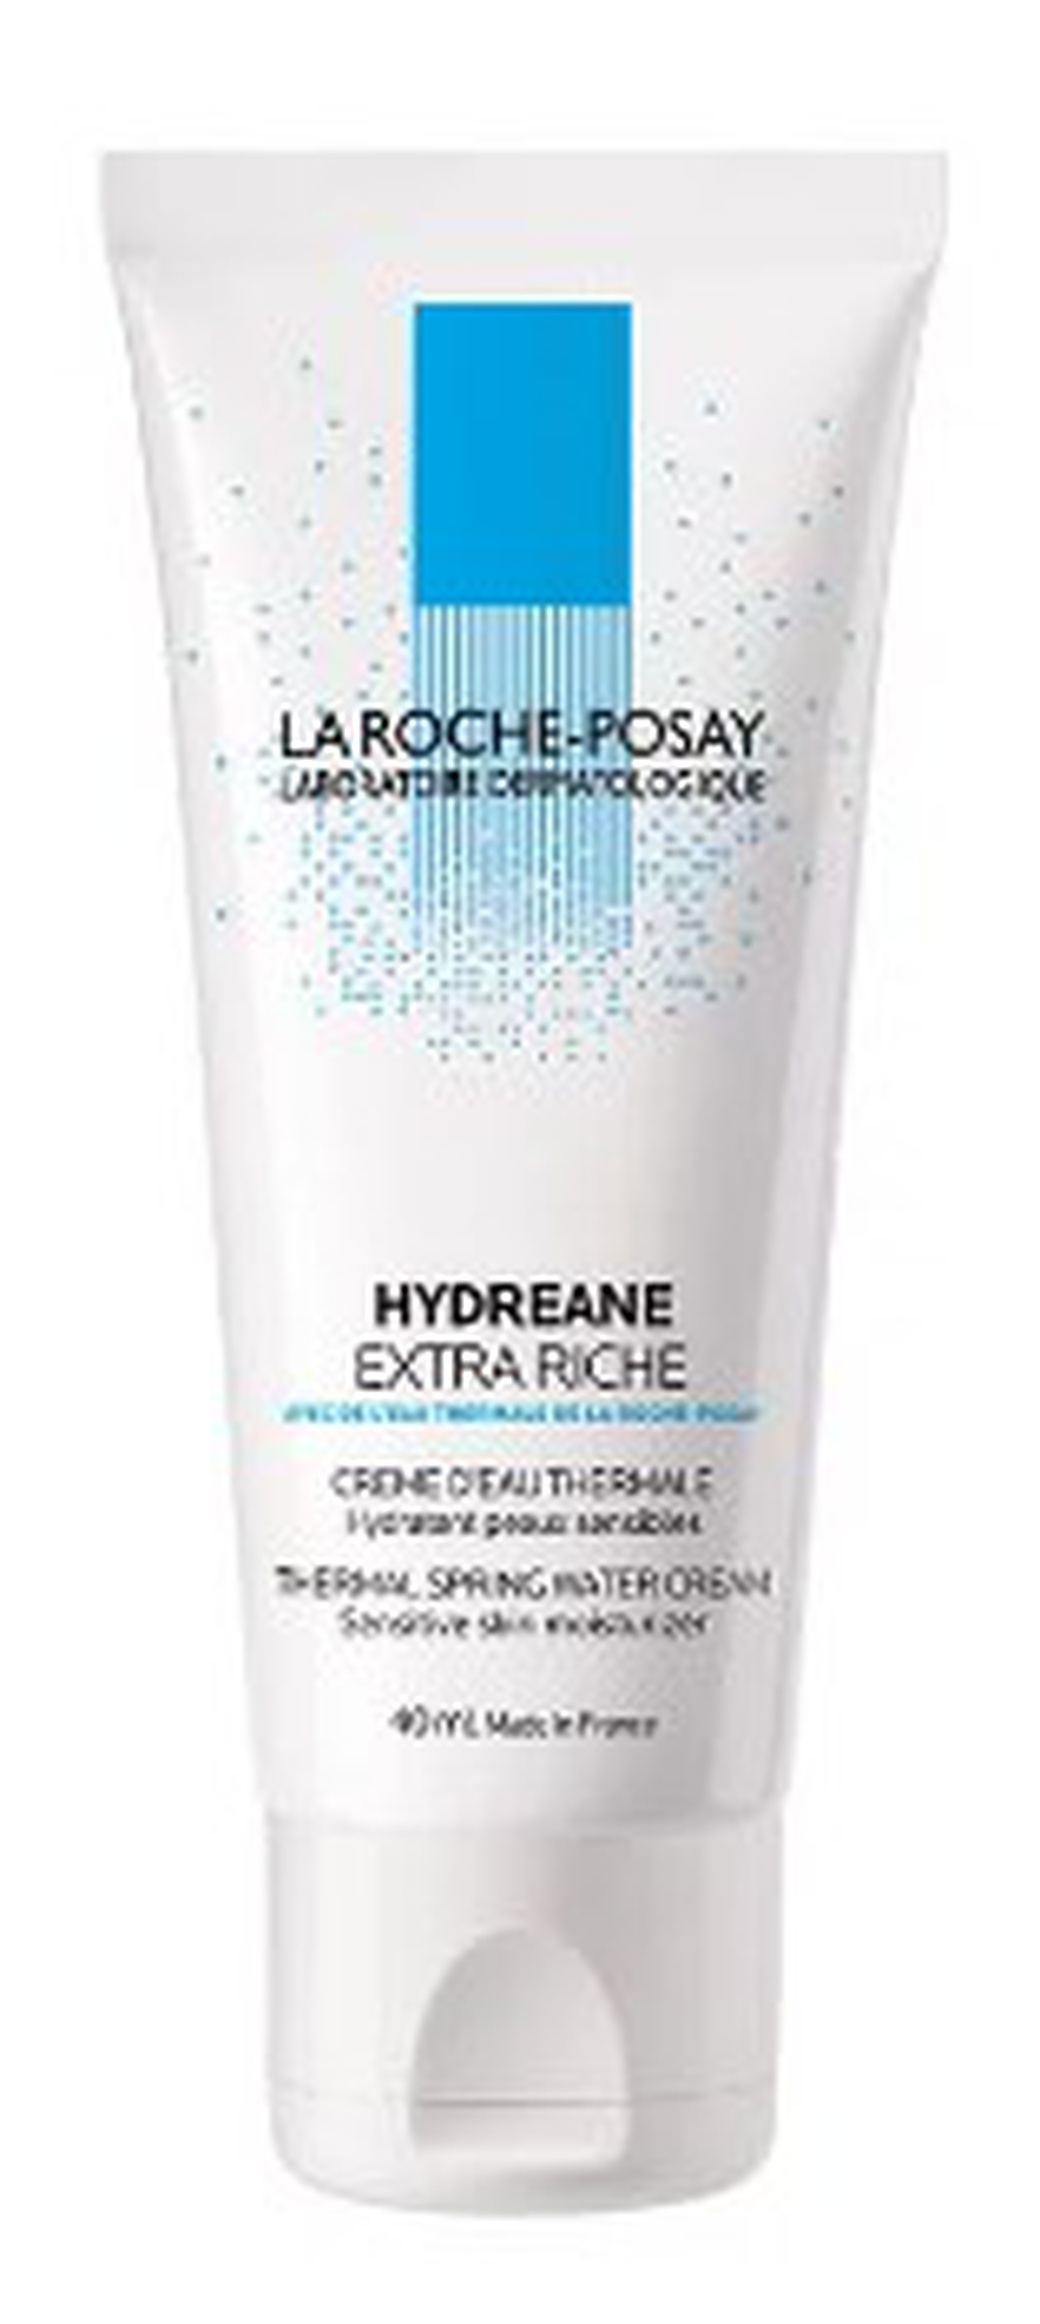 La Roche-Posay Hydreane Extra Riche увлажняющий крем лица для чувствительной кожи, склонной к сухости 40ml фото